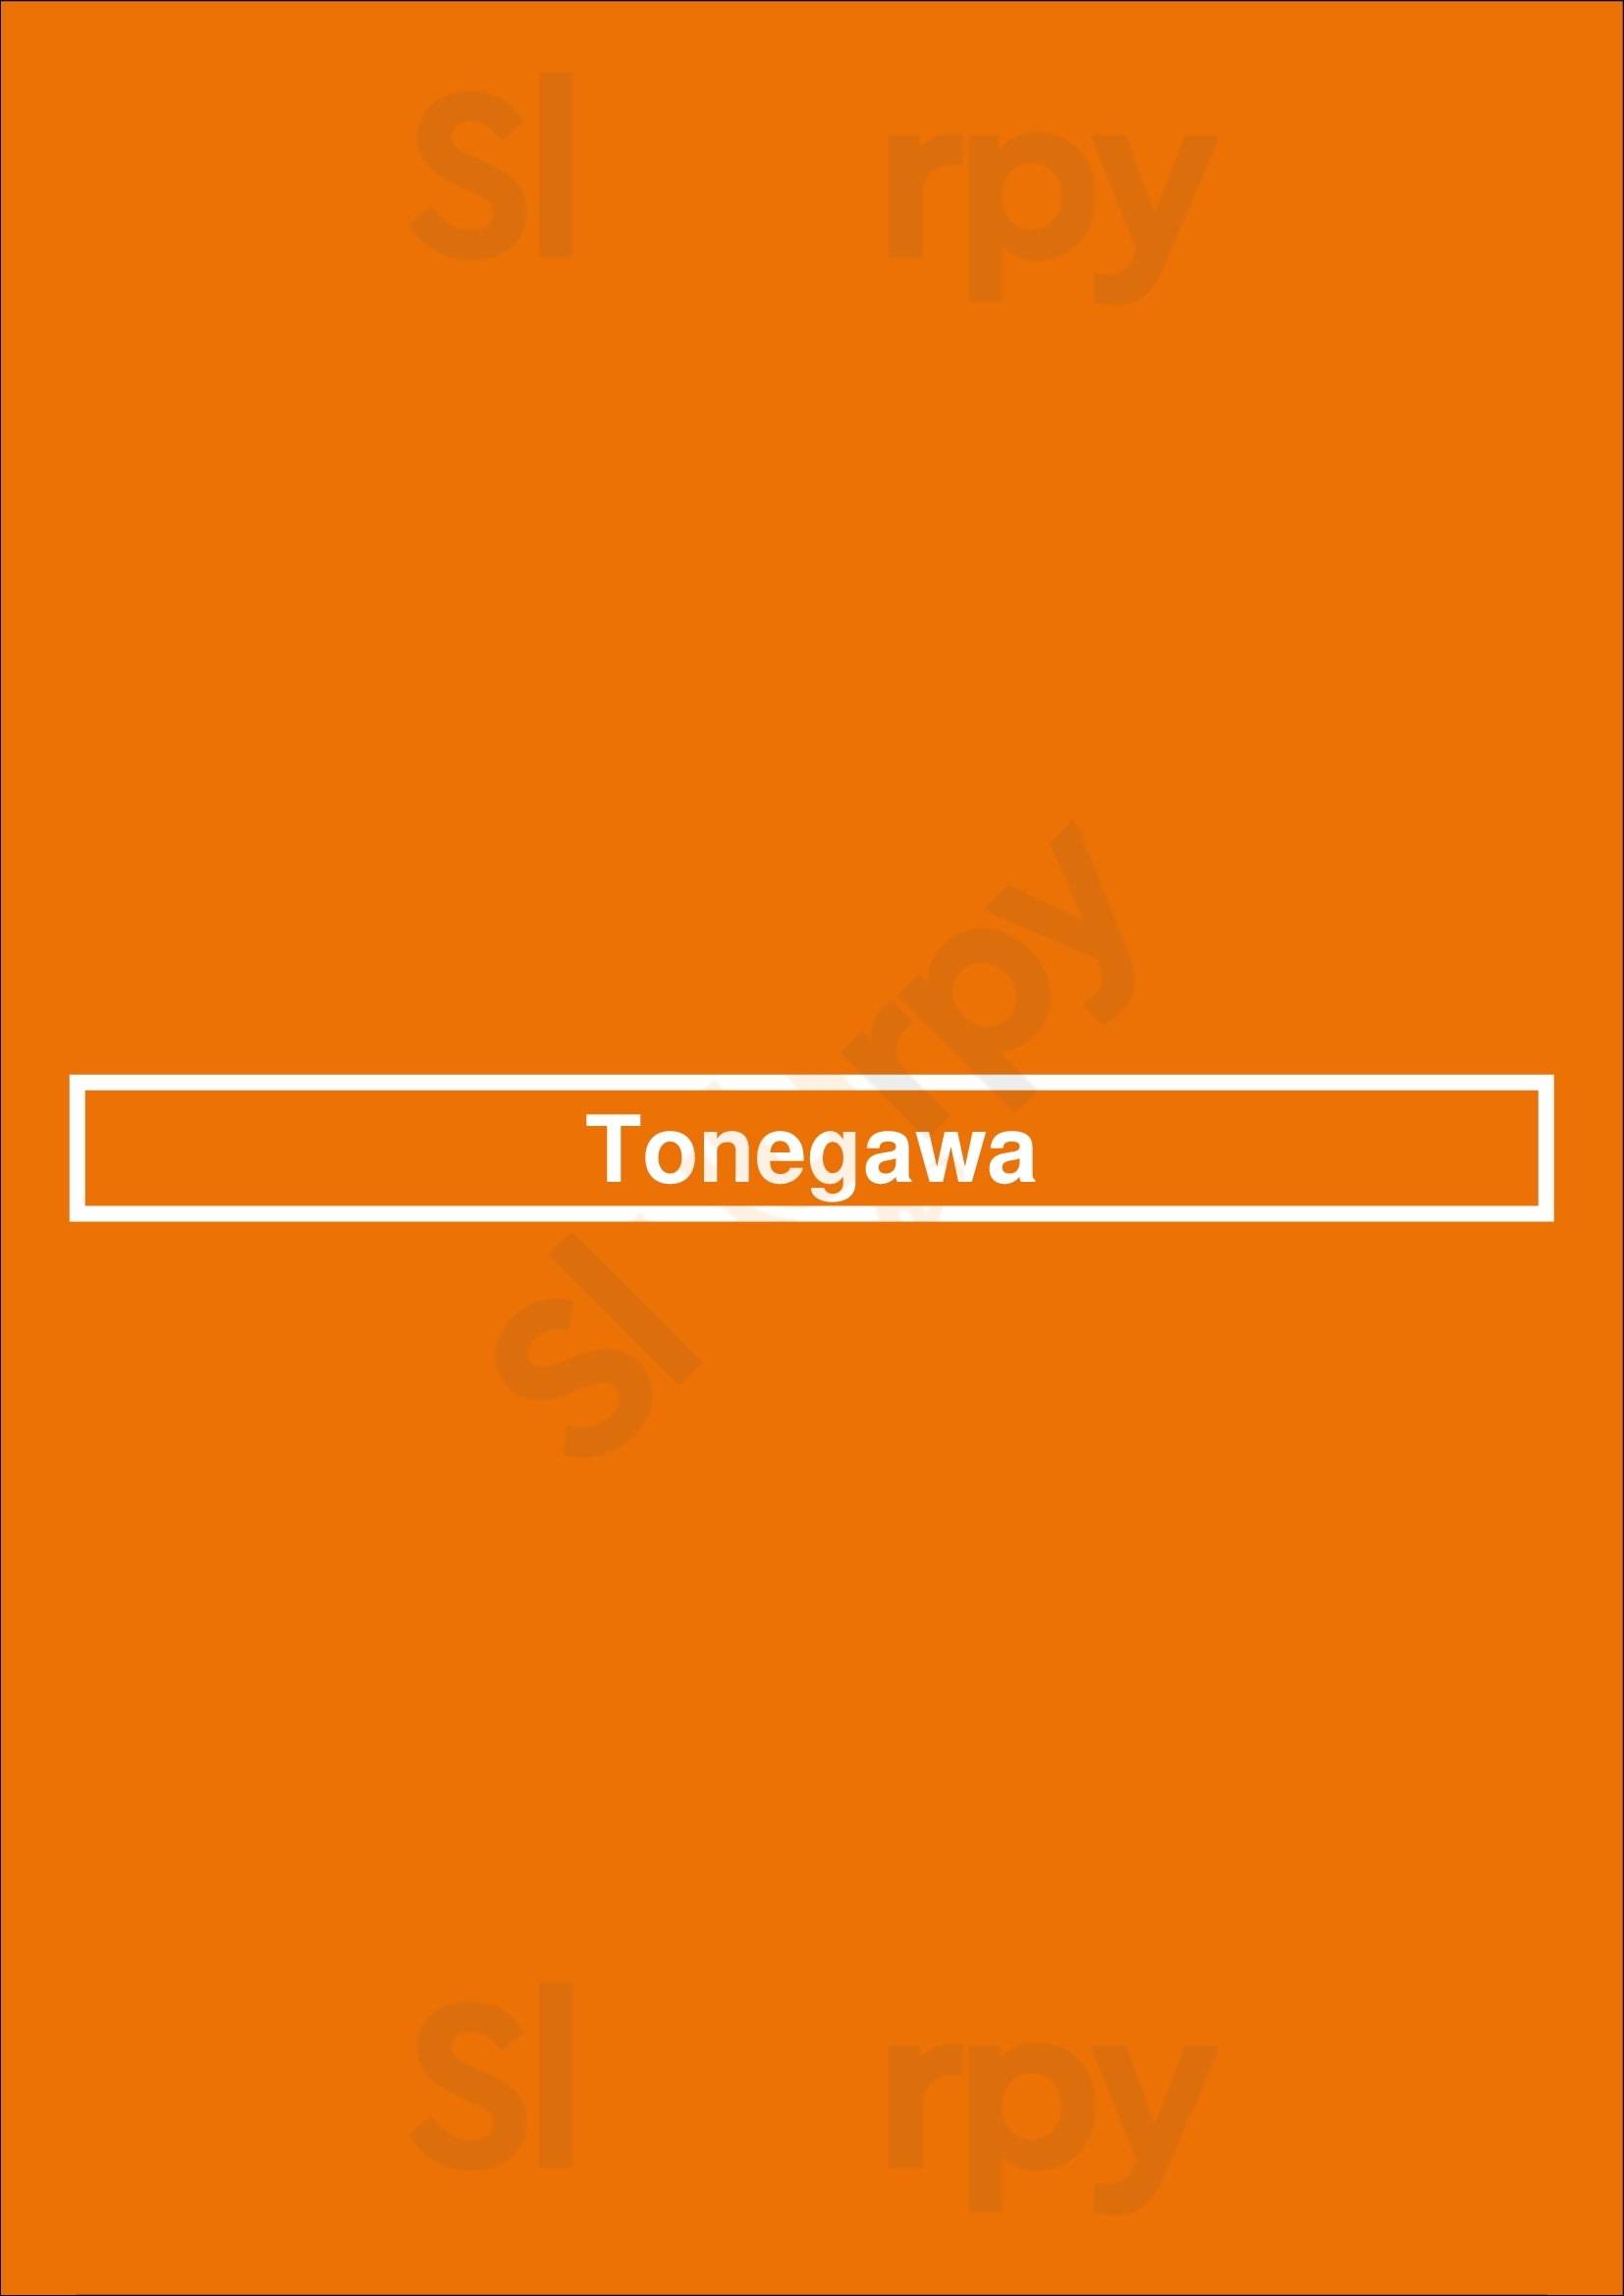 Tonegawa Paris Menu - 1